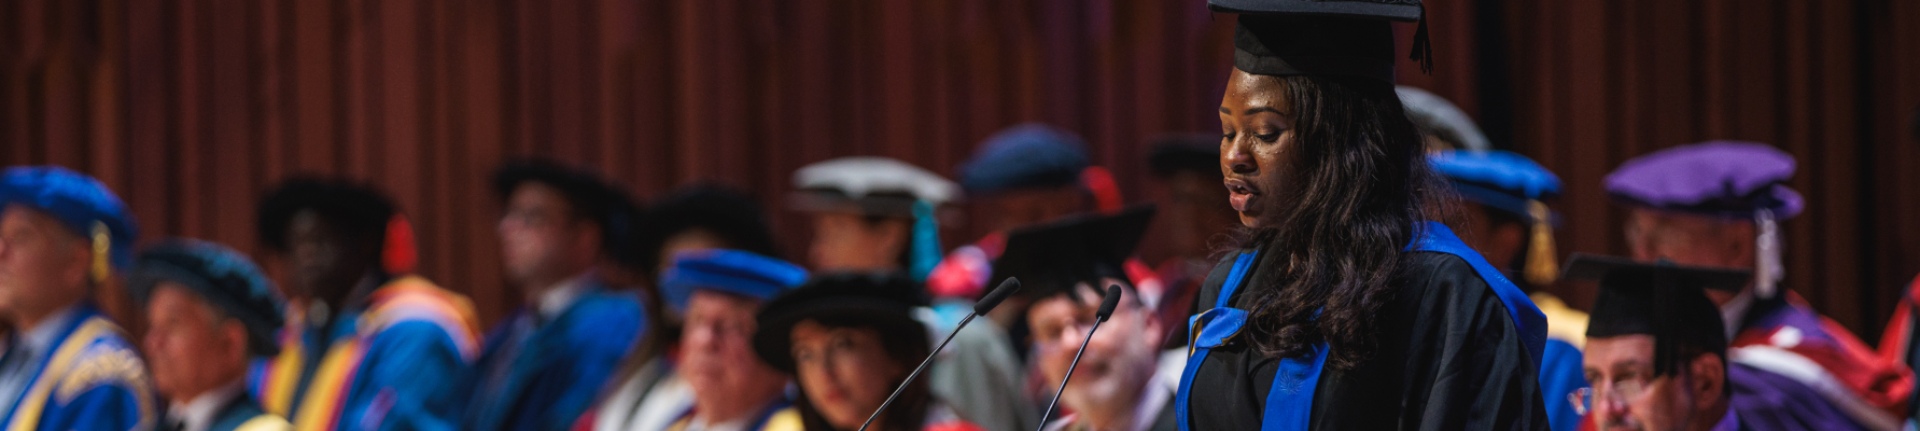 University graduate giving a speech at a graduation ceremony